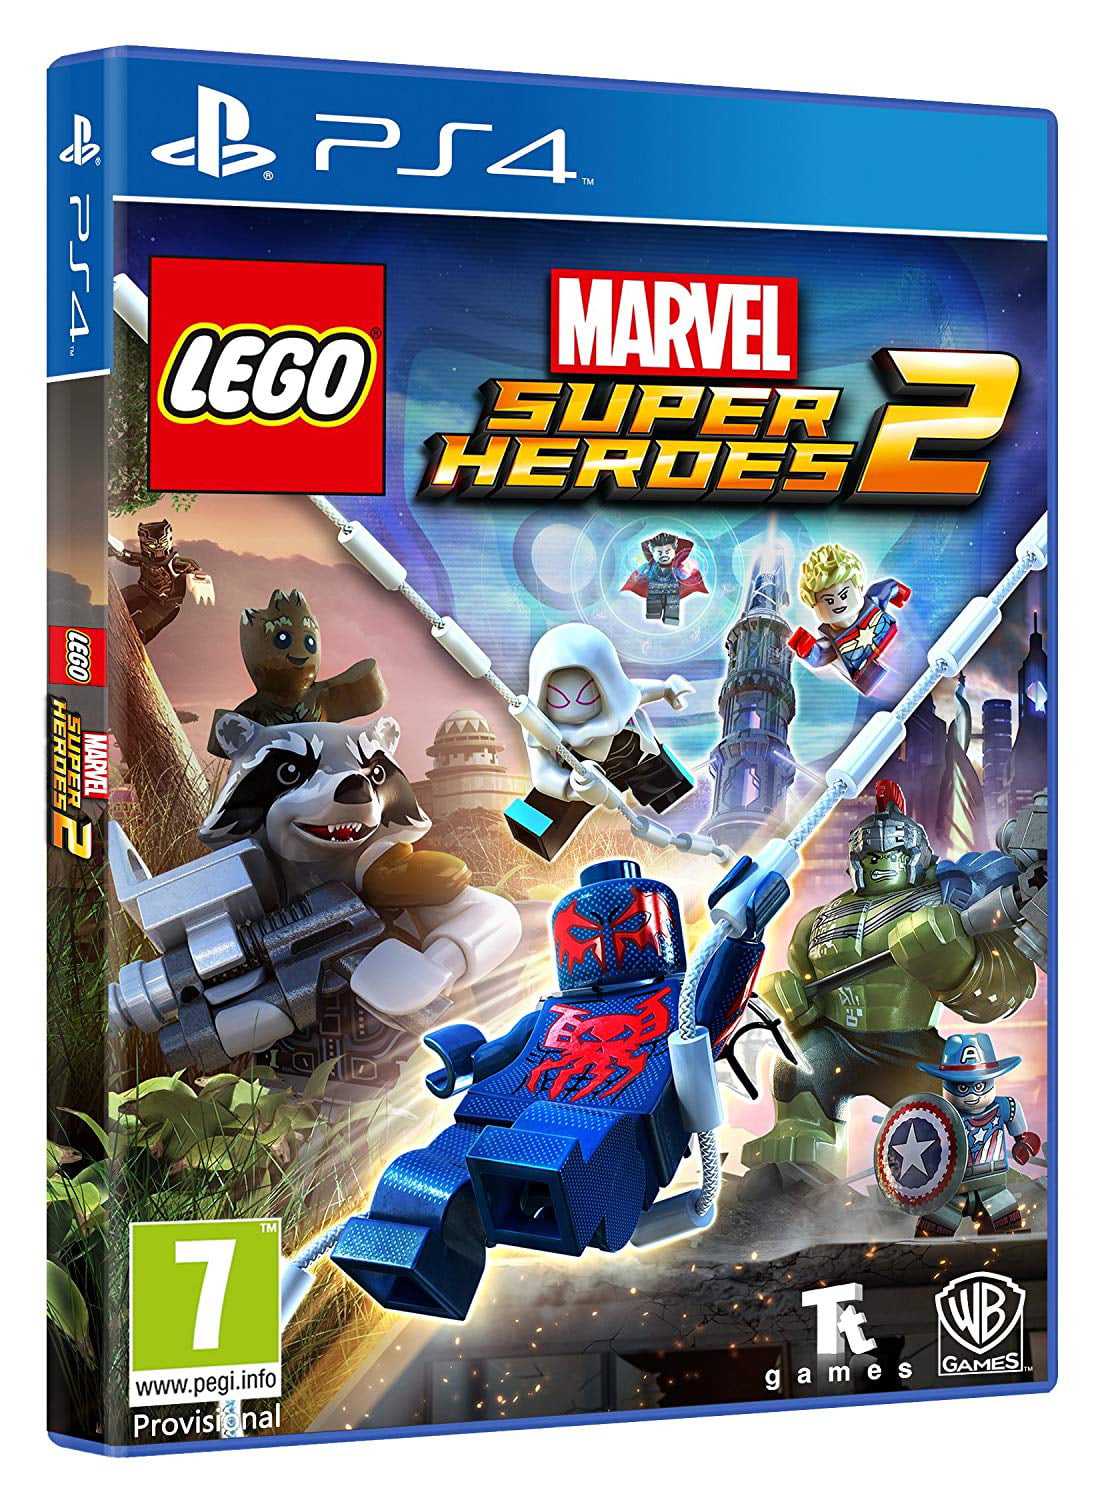 Playstation 2 games, Action Bundle Spiderman, Hulk, Lego & Fantastic 4 PS2